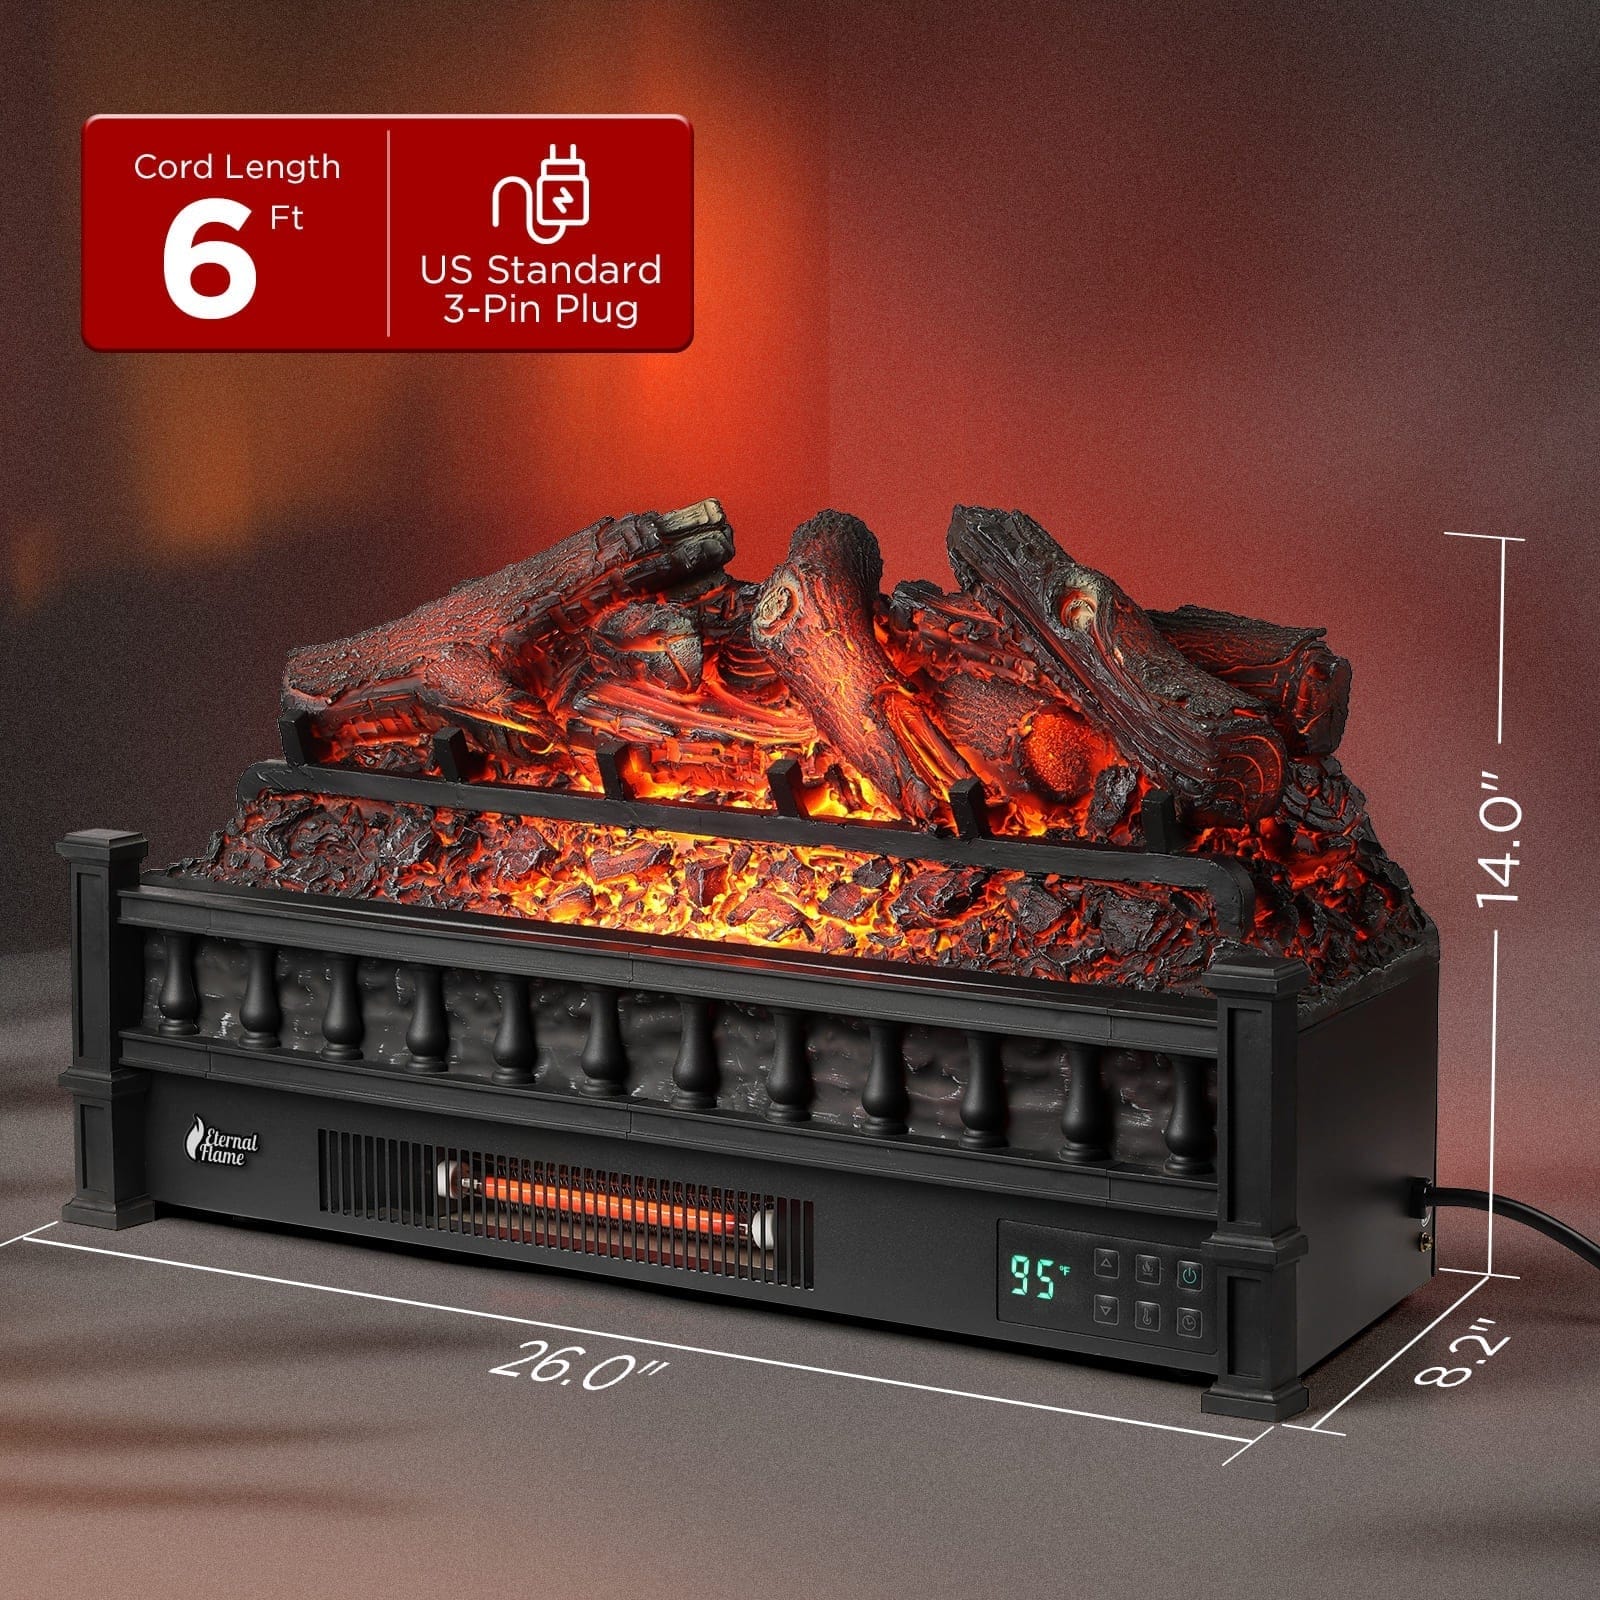 TURBRO Eternal Flame EF26-LG Smart Electric Fireplace Logs, WiFi Enabled Electric Fireplace Logs